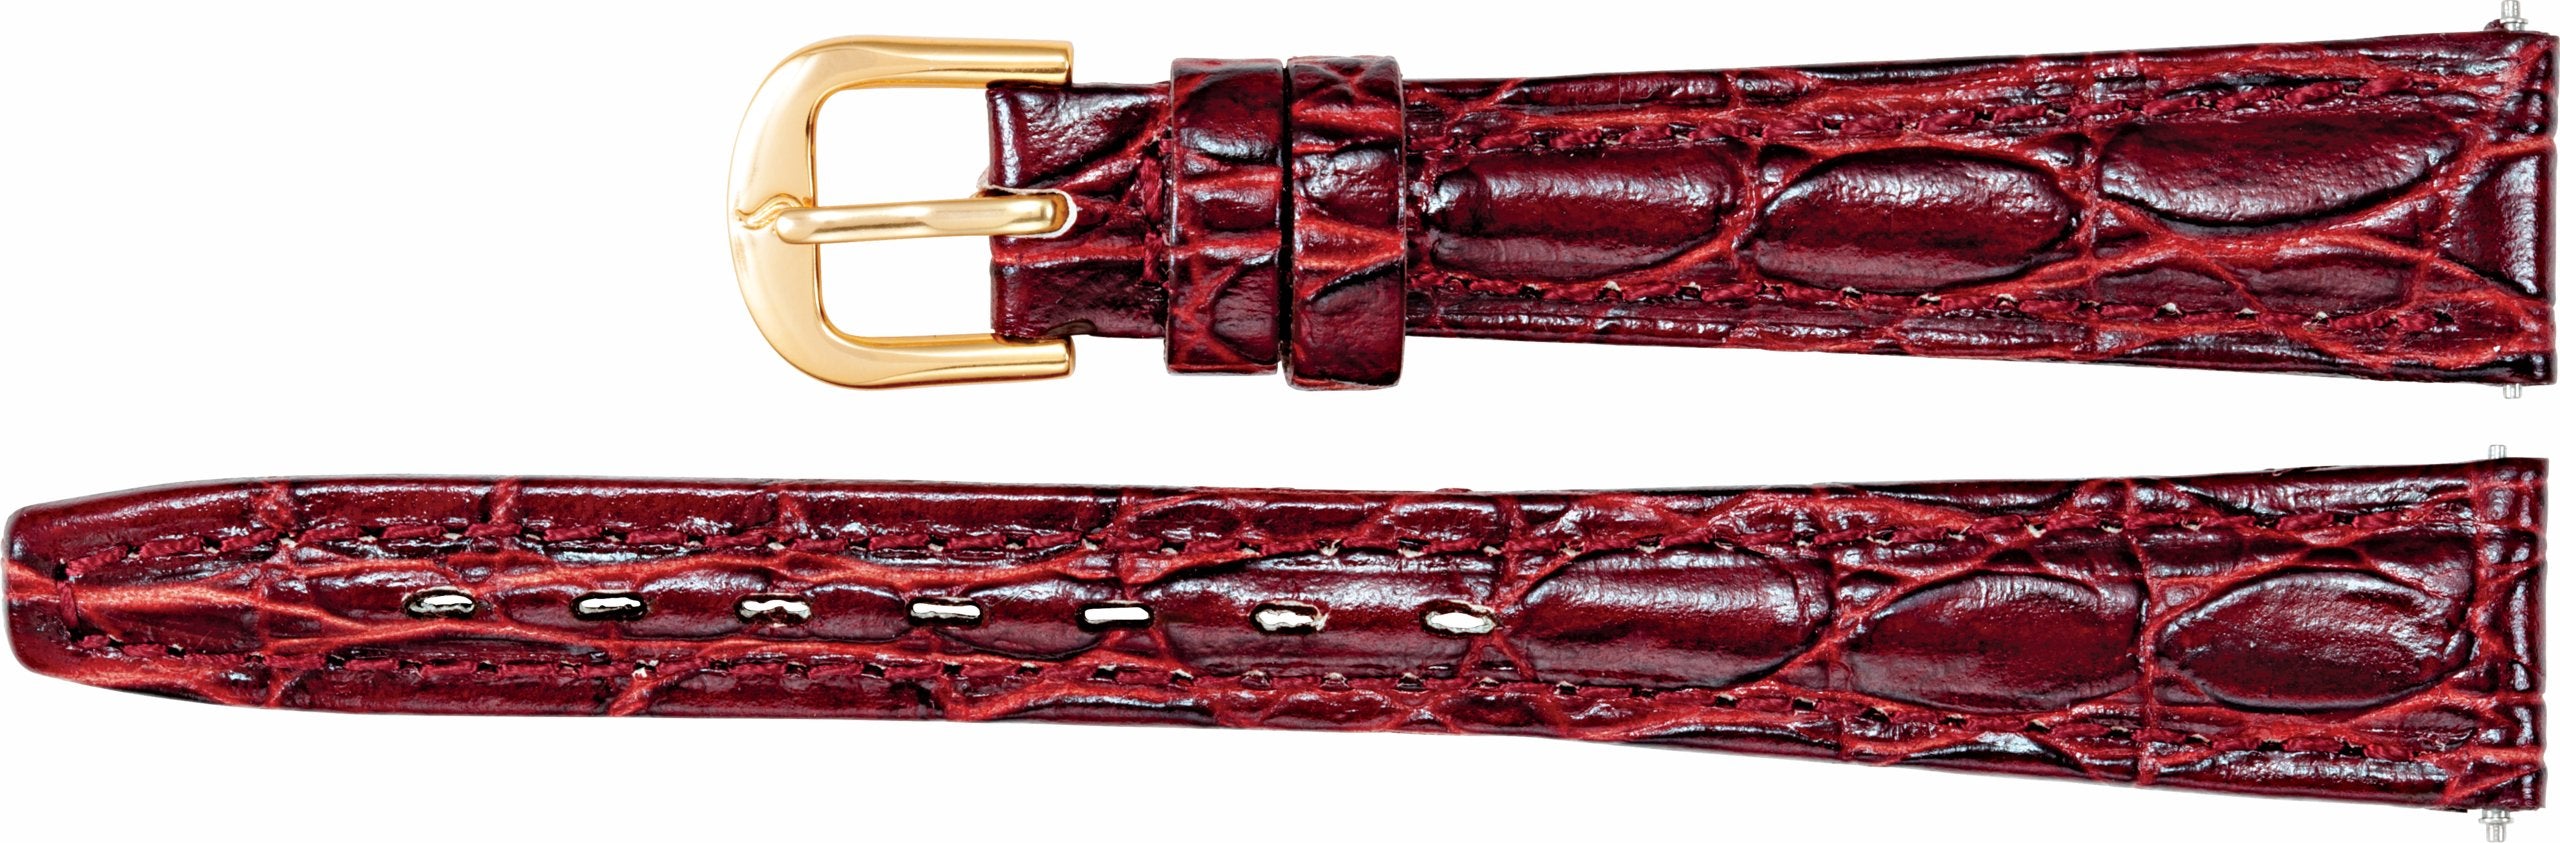 Leather Crocodile Grain Semi-Padded Watch Band